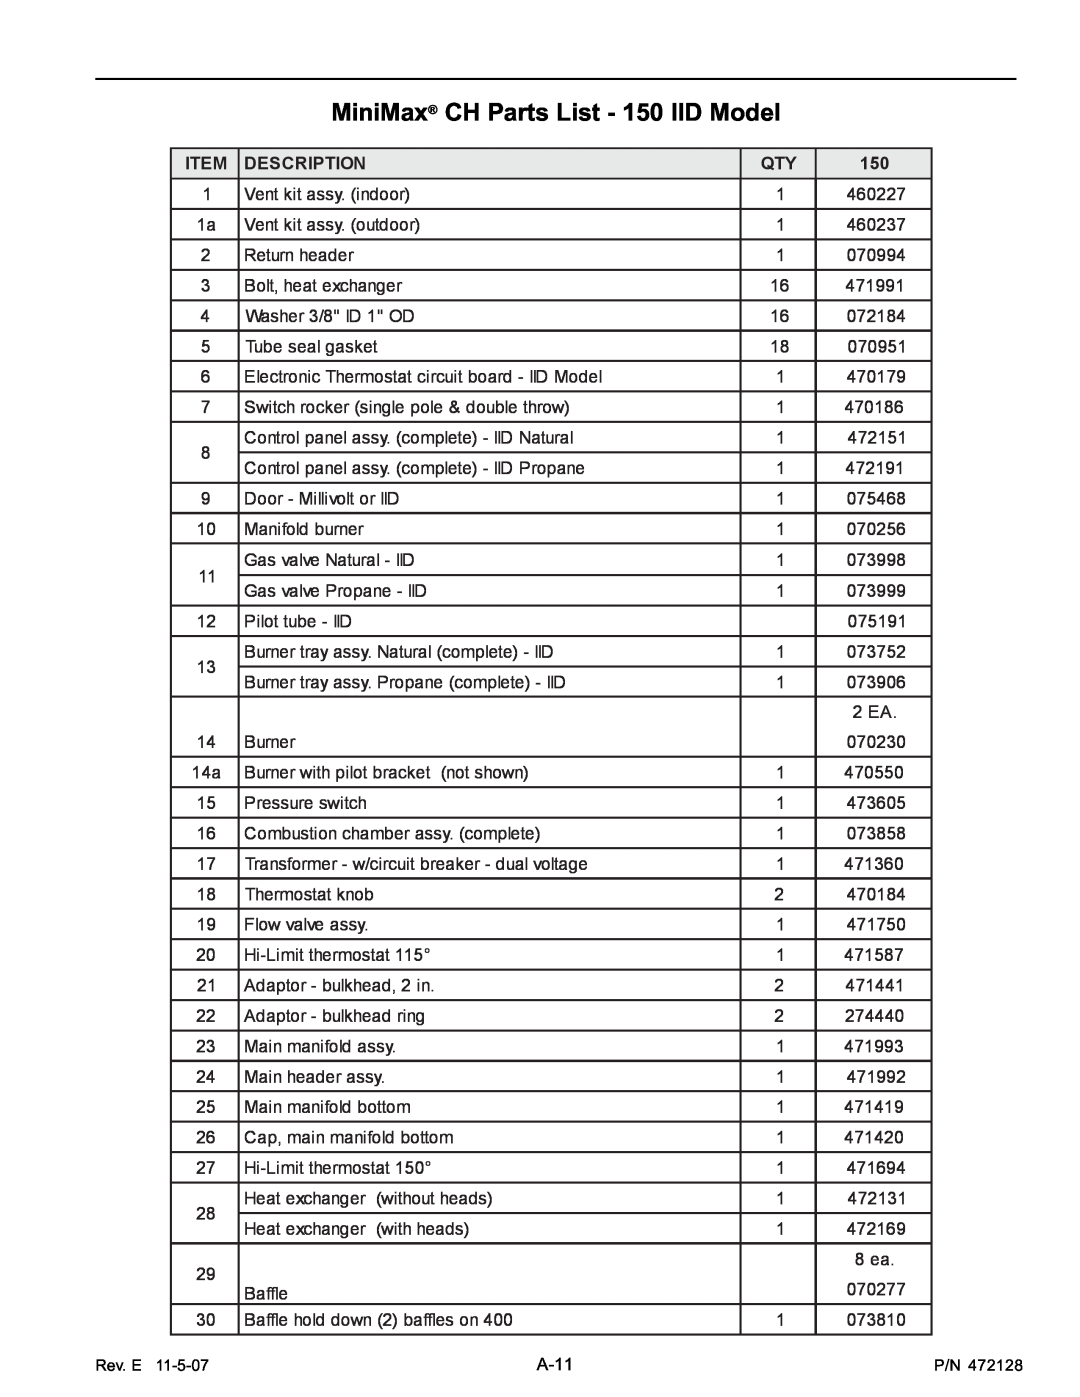 Pentair Hot Tub manual MiniMax CH Parts List - 150 IID Model, Description, A-11 